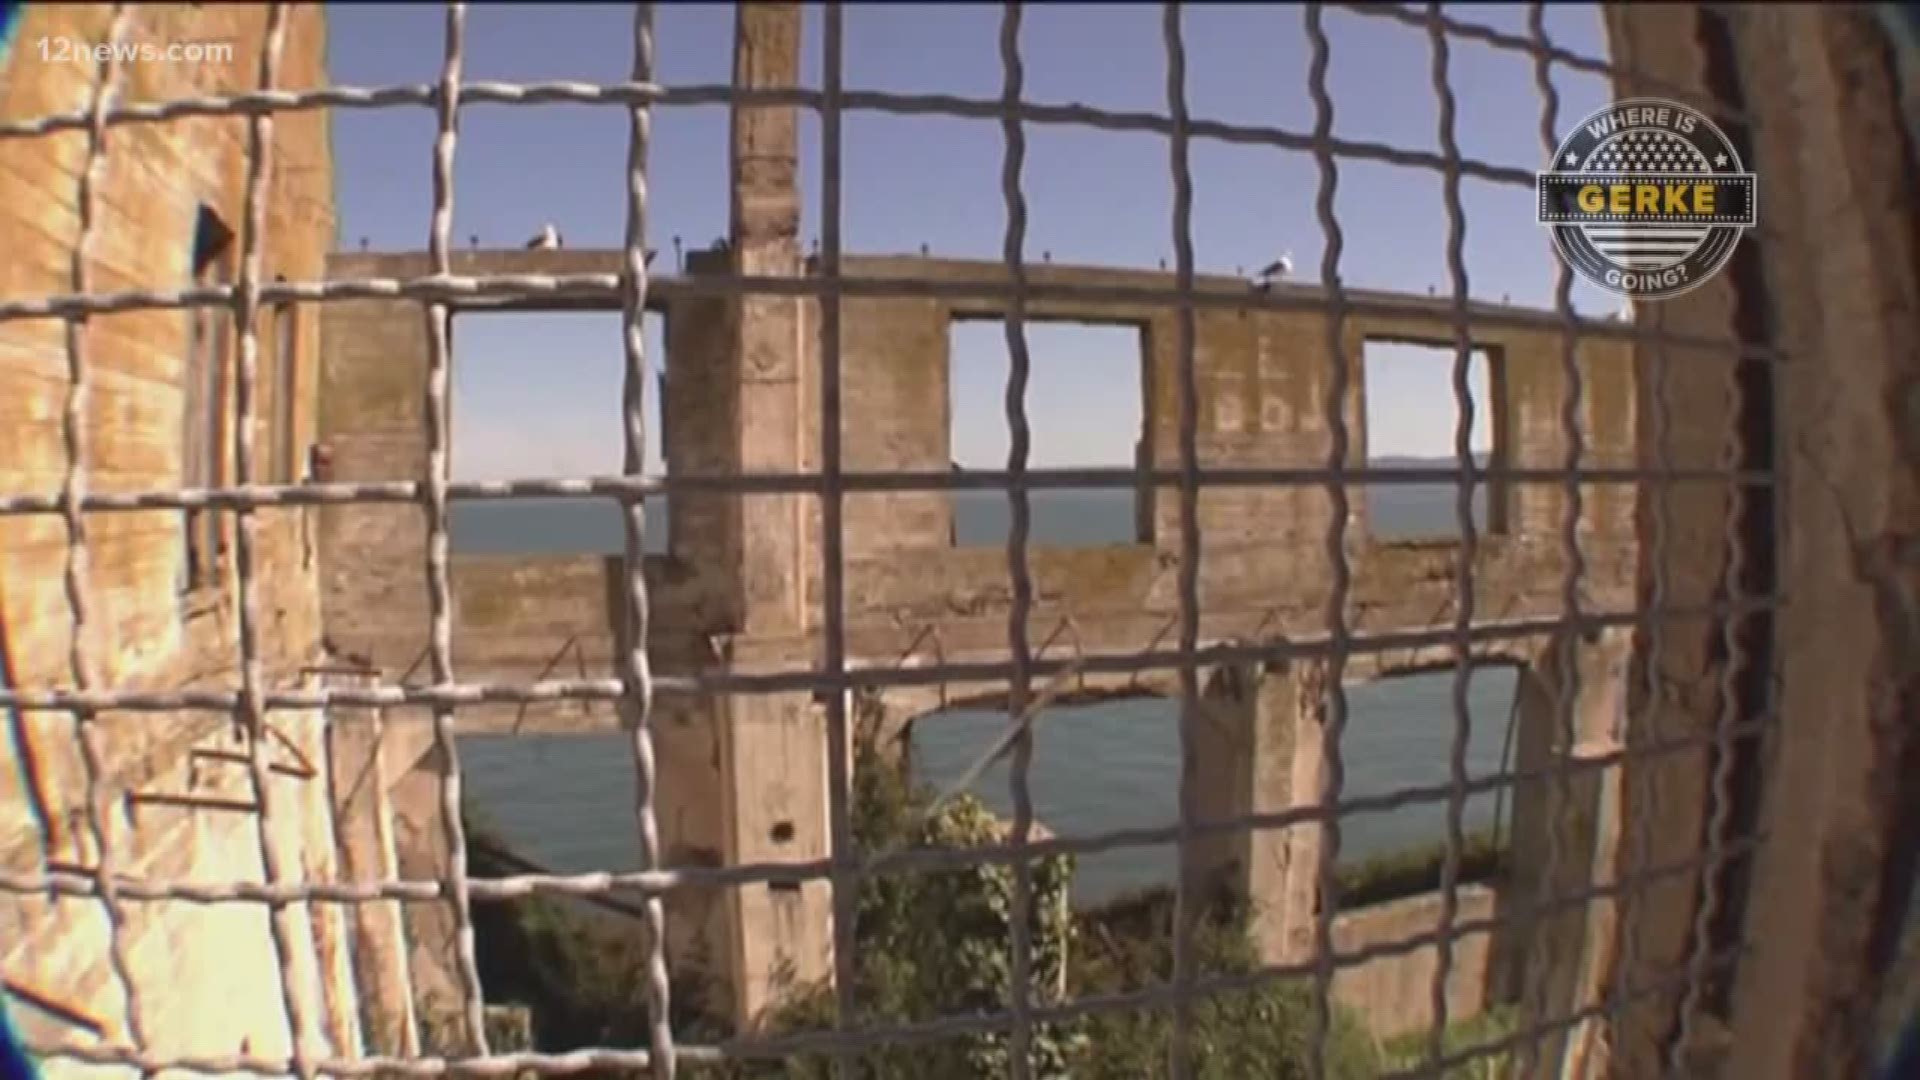 One of the most popular spots in San Francisco is Alcatraz Island.